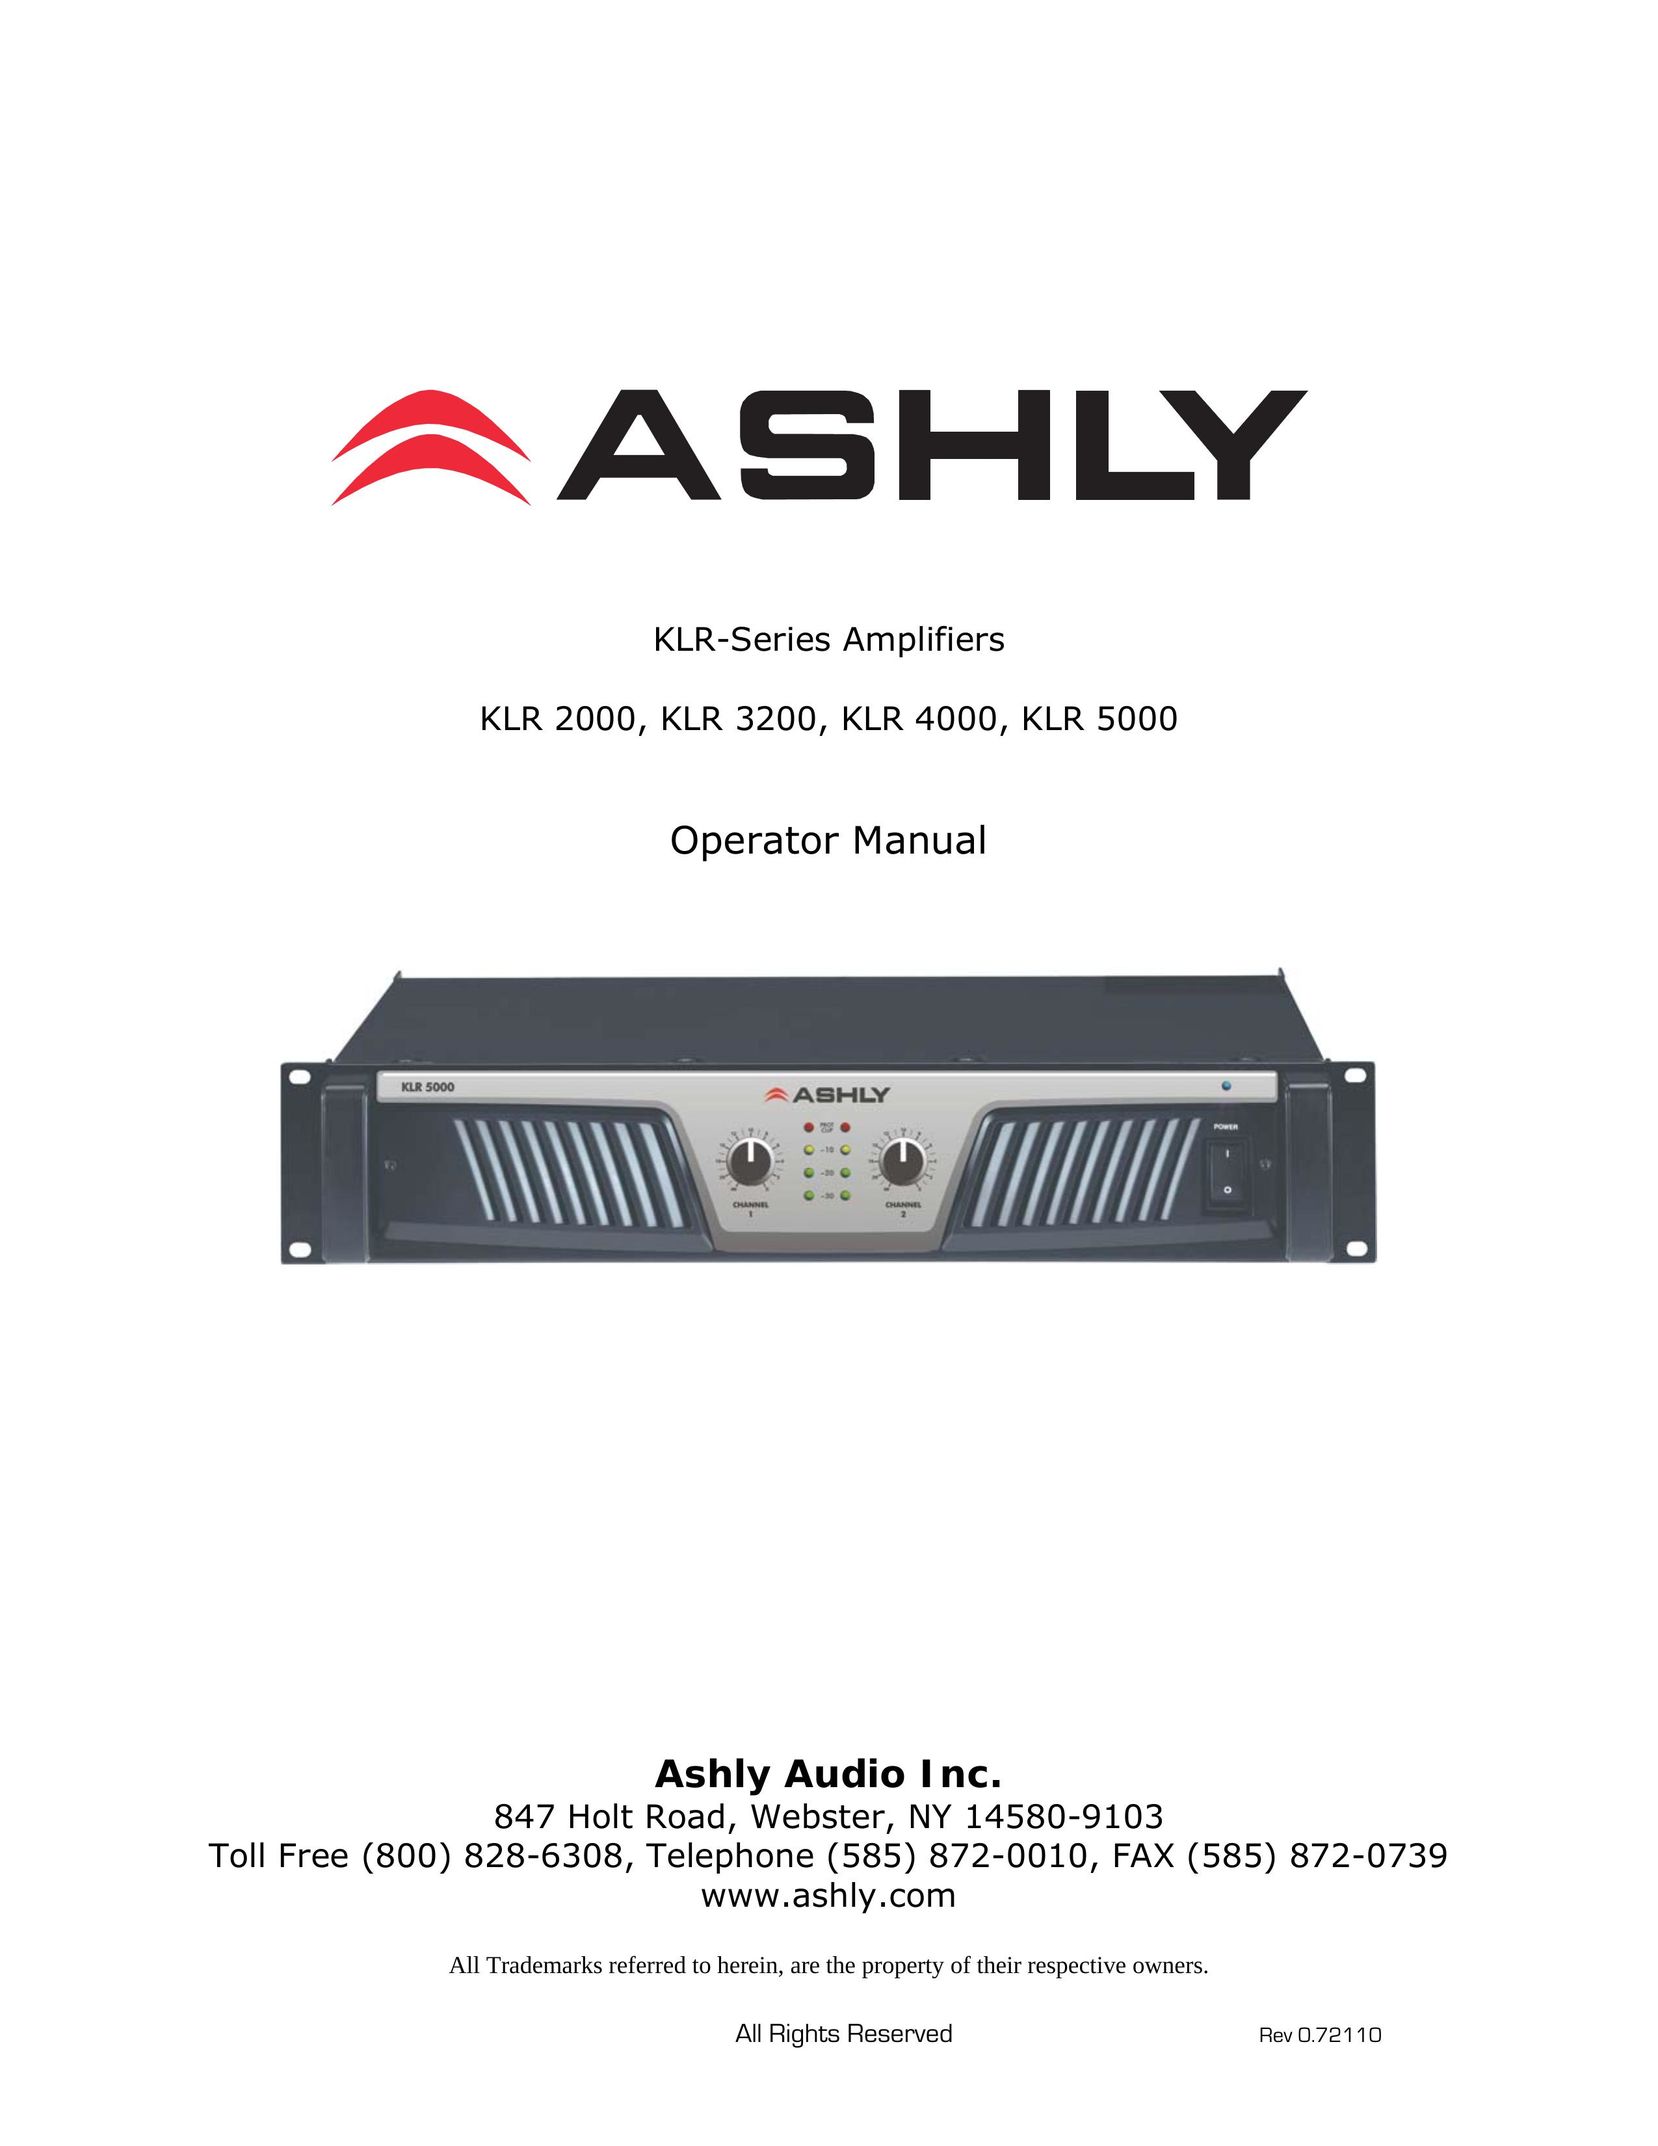 Ashly KLR 3200 Car Amplifier User Manual